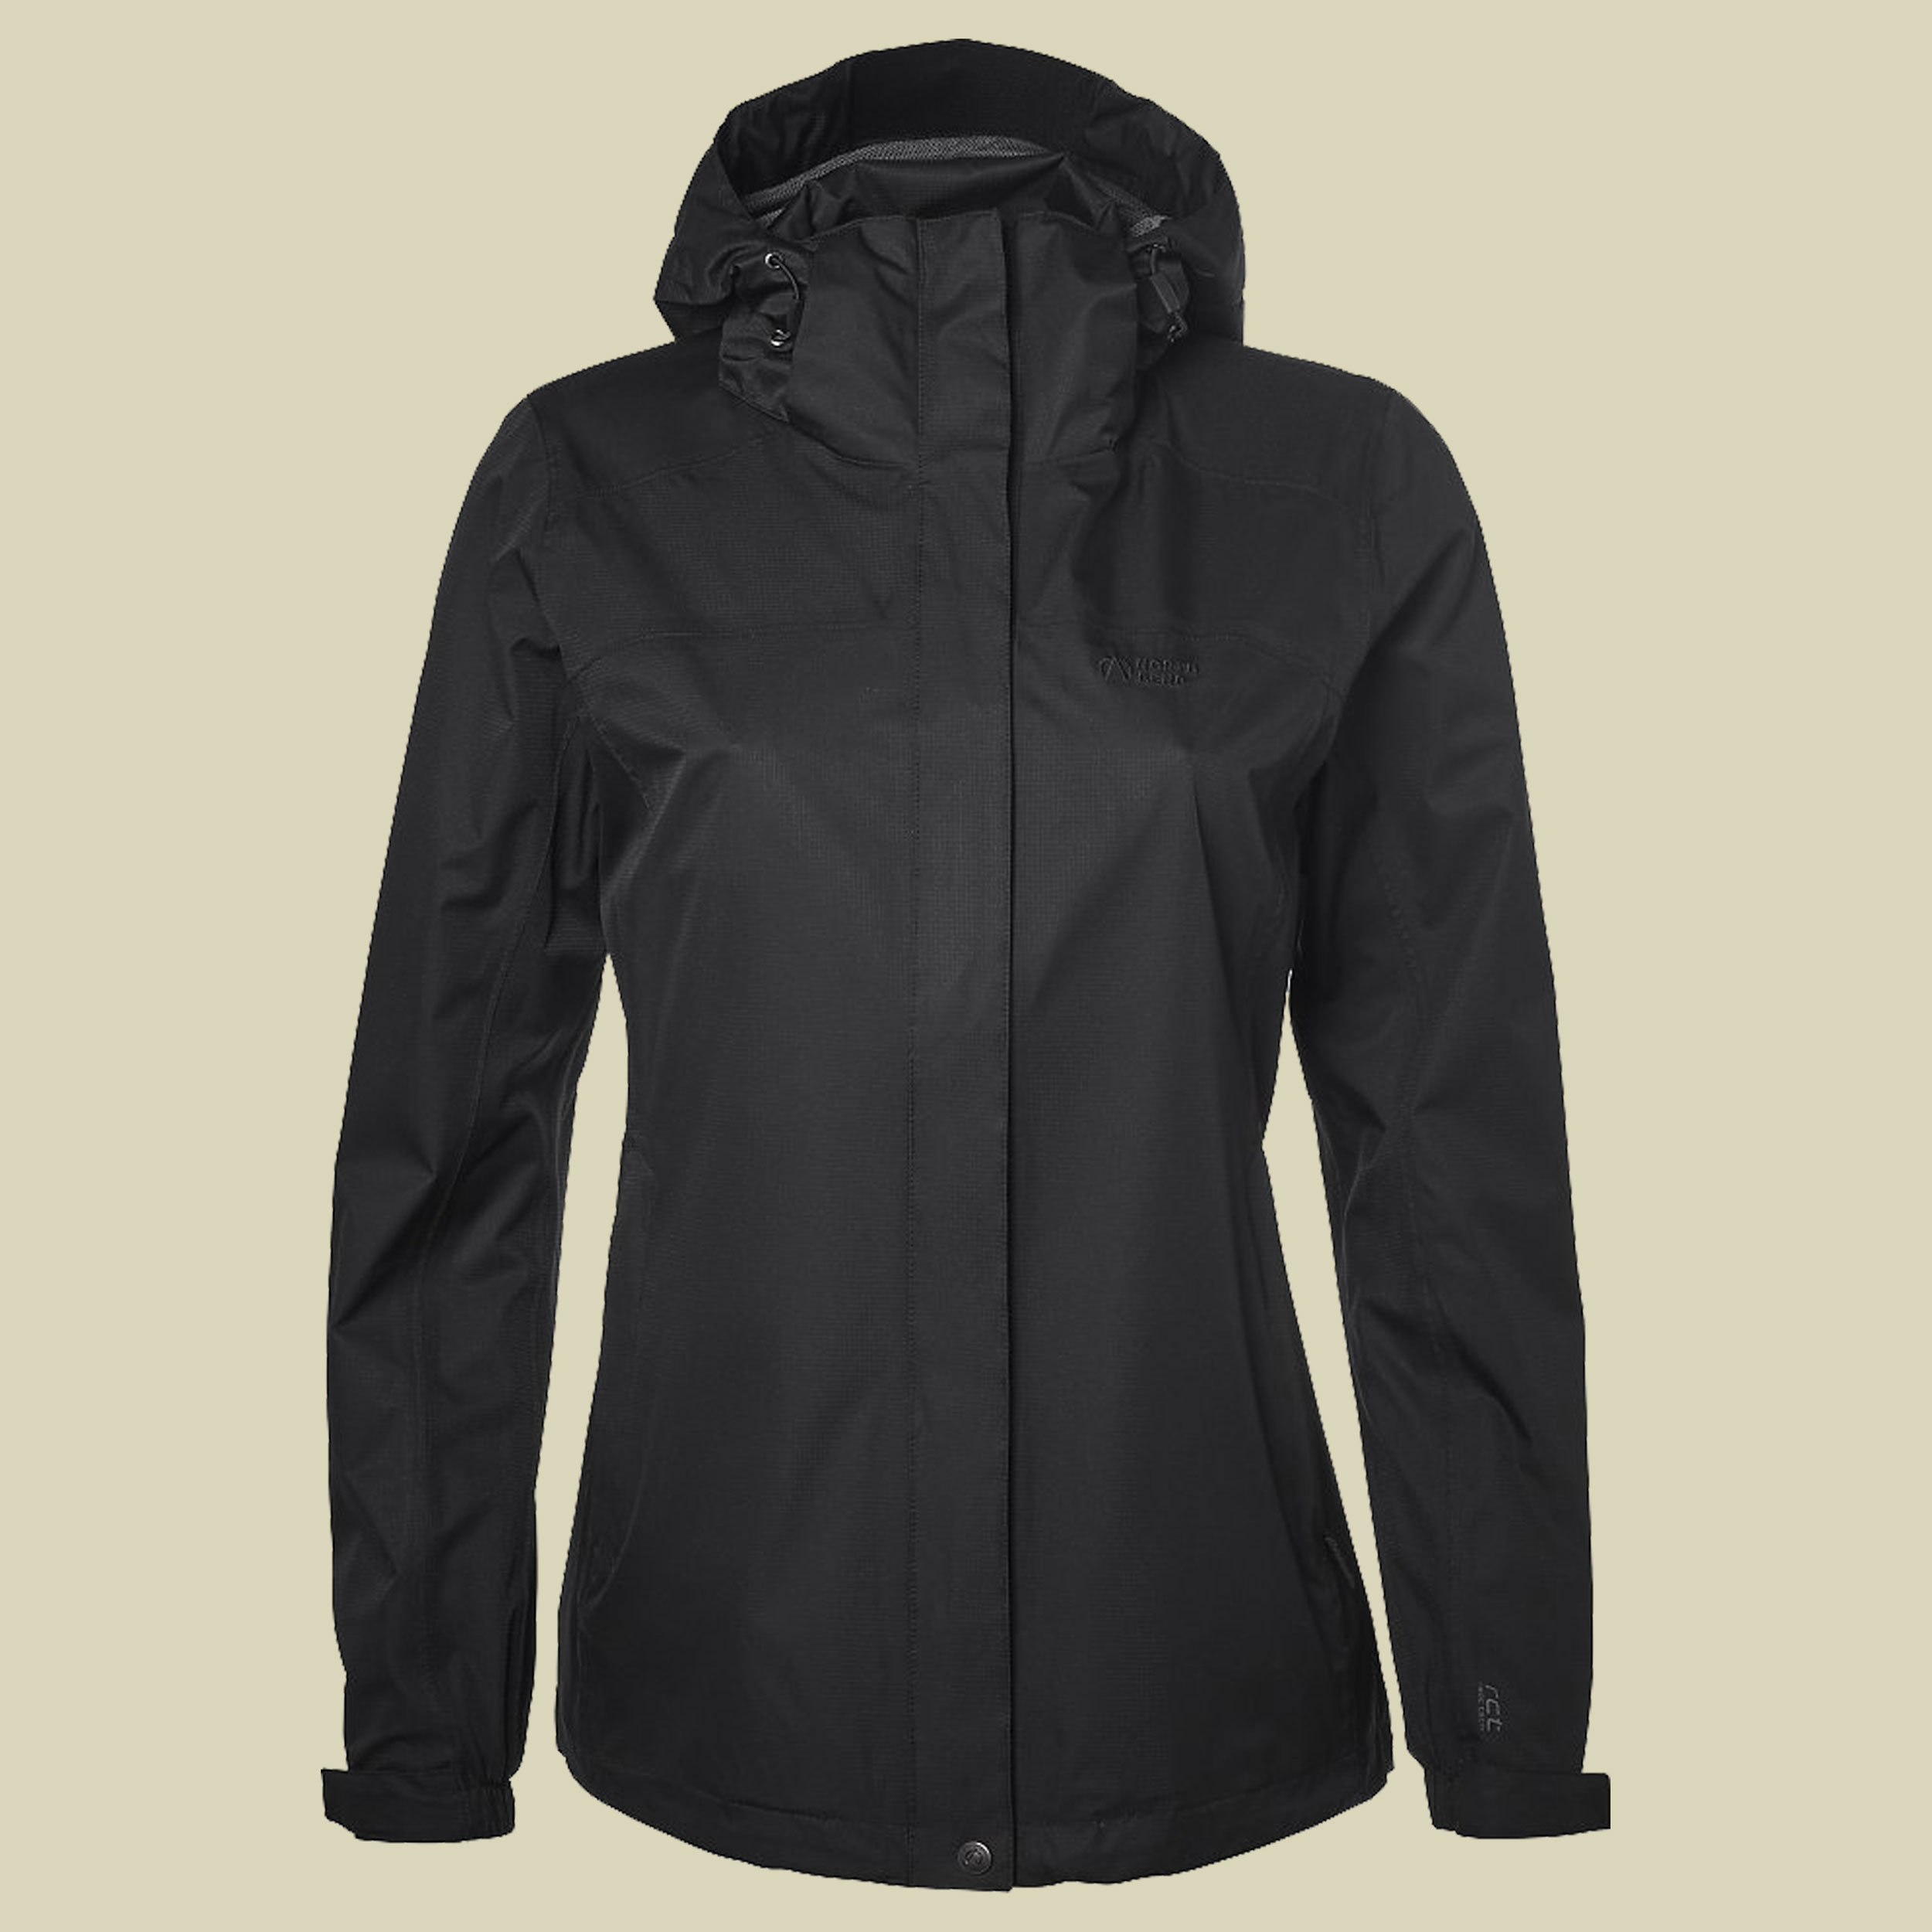 ExoRain Jacket W Damen Größe 44 Farbe black 500